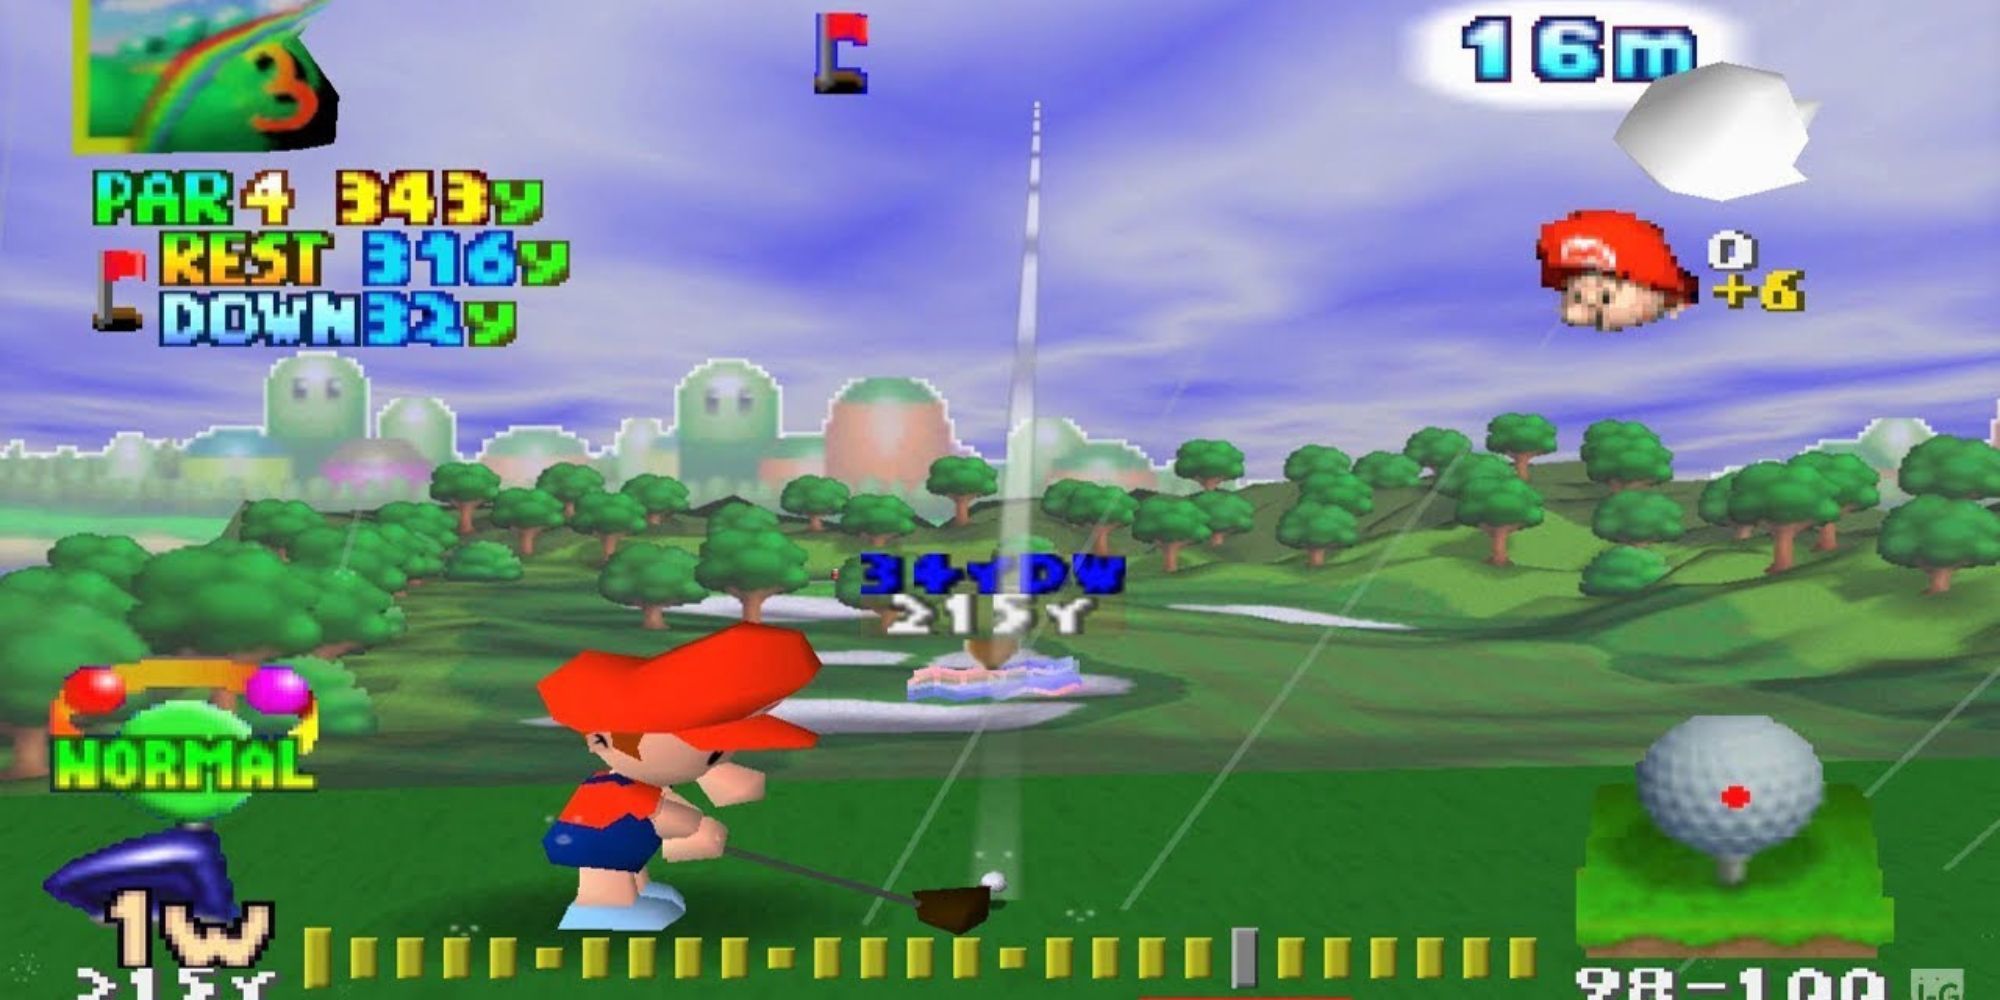 Baby Mario taking his shot in Mario Golf